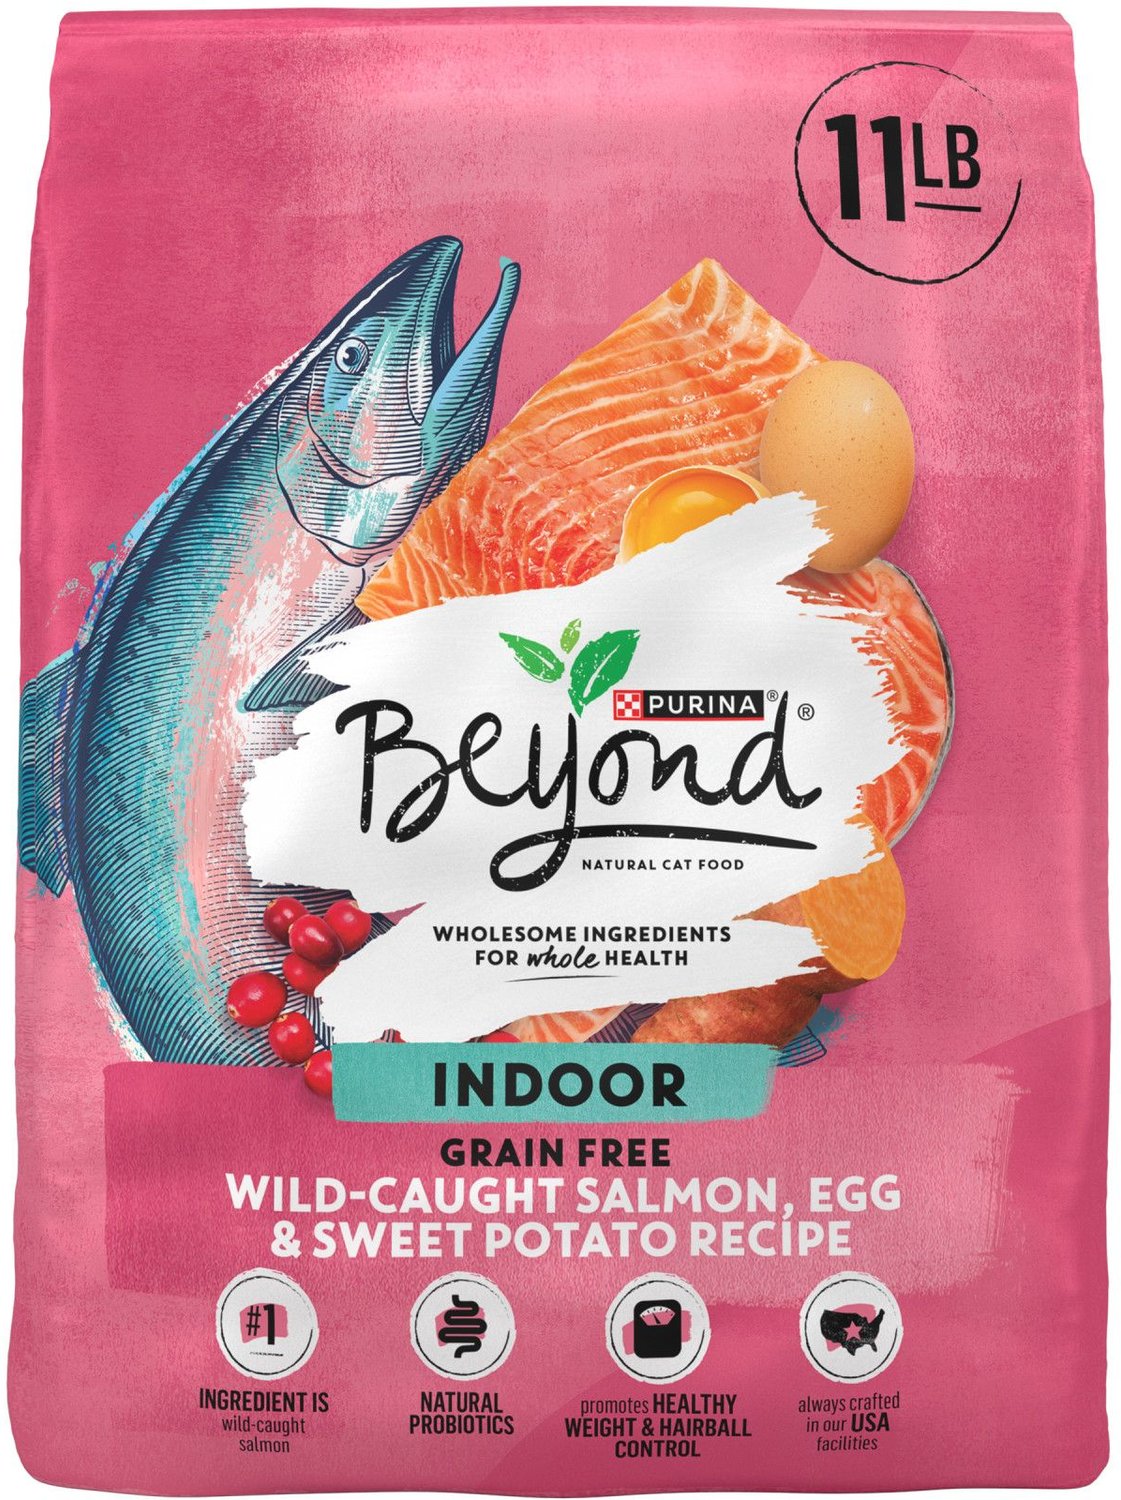 Purina Beyond Simply Indoor Wild-Caught Salmon